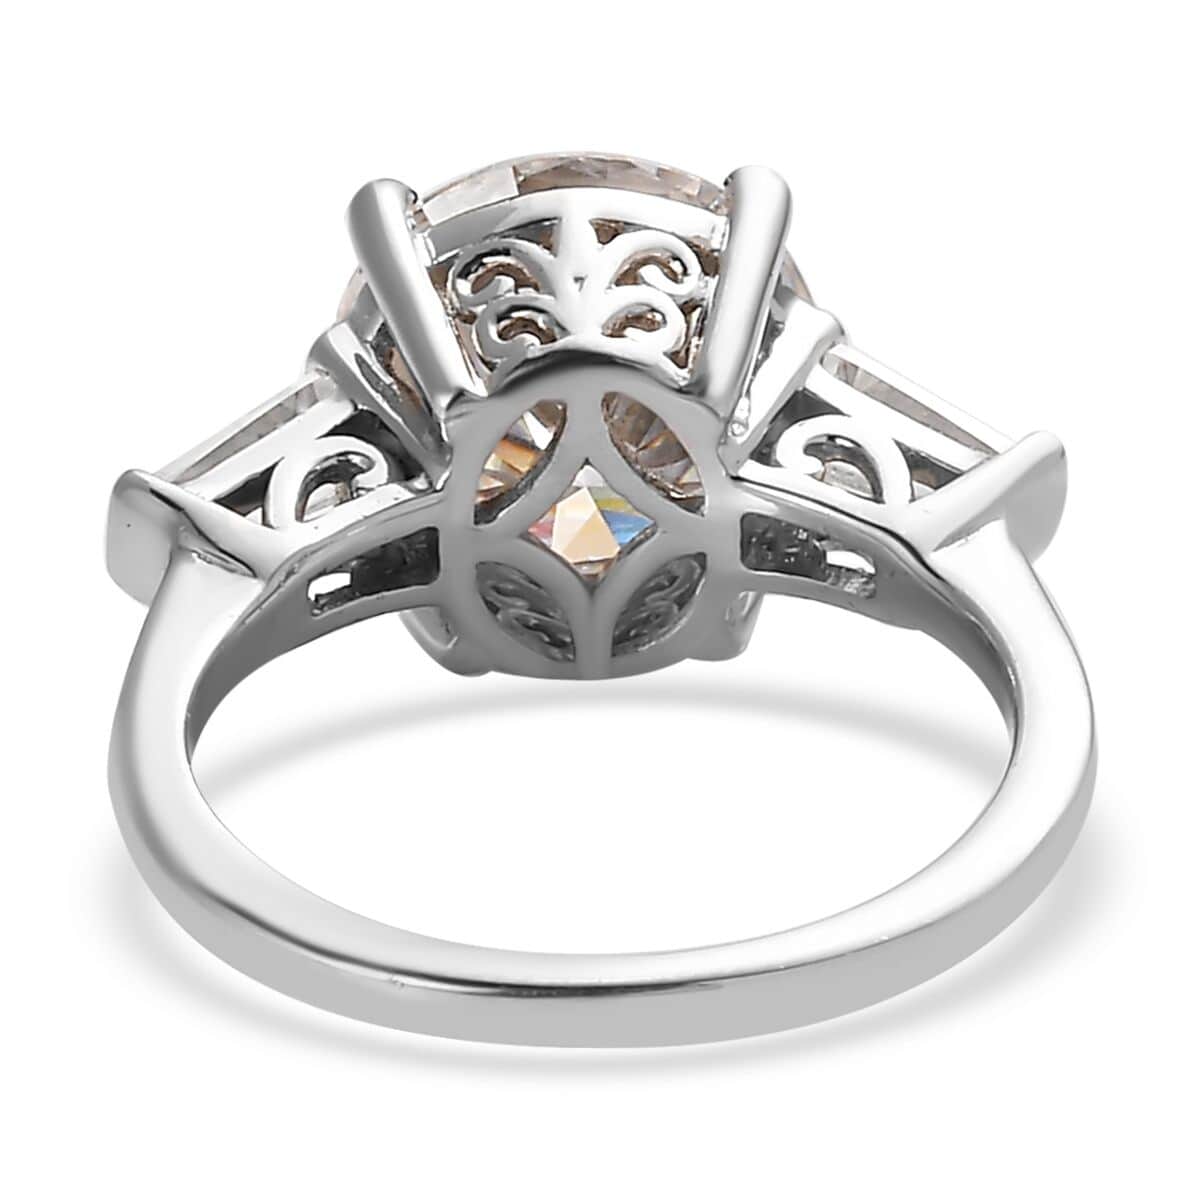 Net ring sterling silver – Online Shop Loveisajewelry